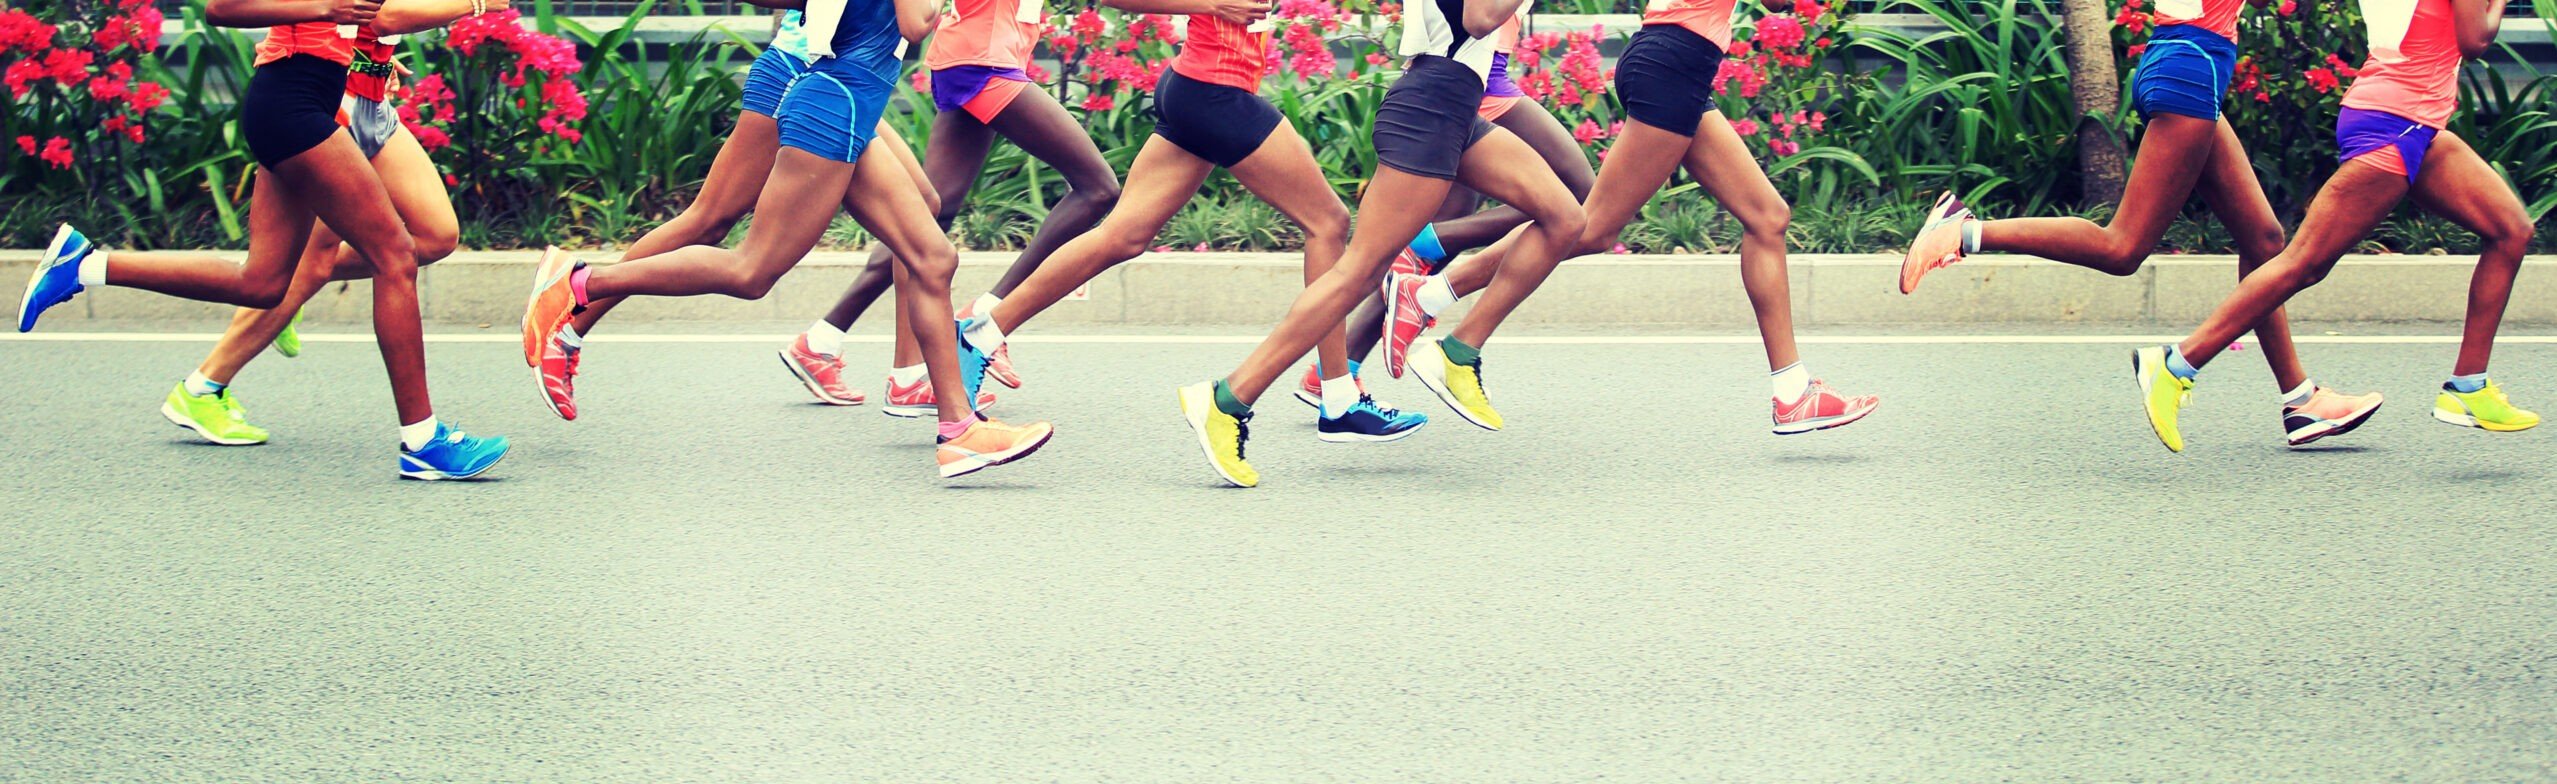 Marathon,Running,Race,,People,Feet,On,City,Road